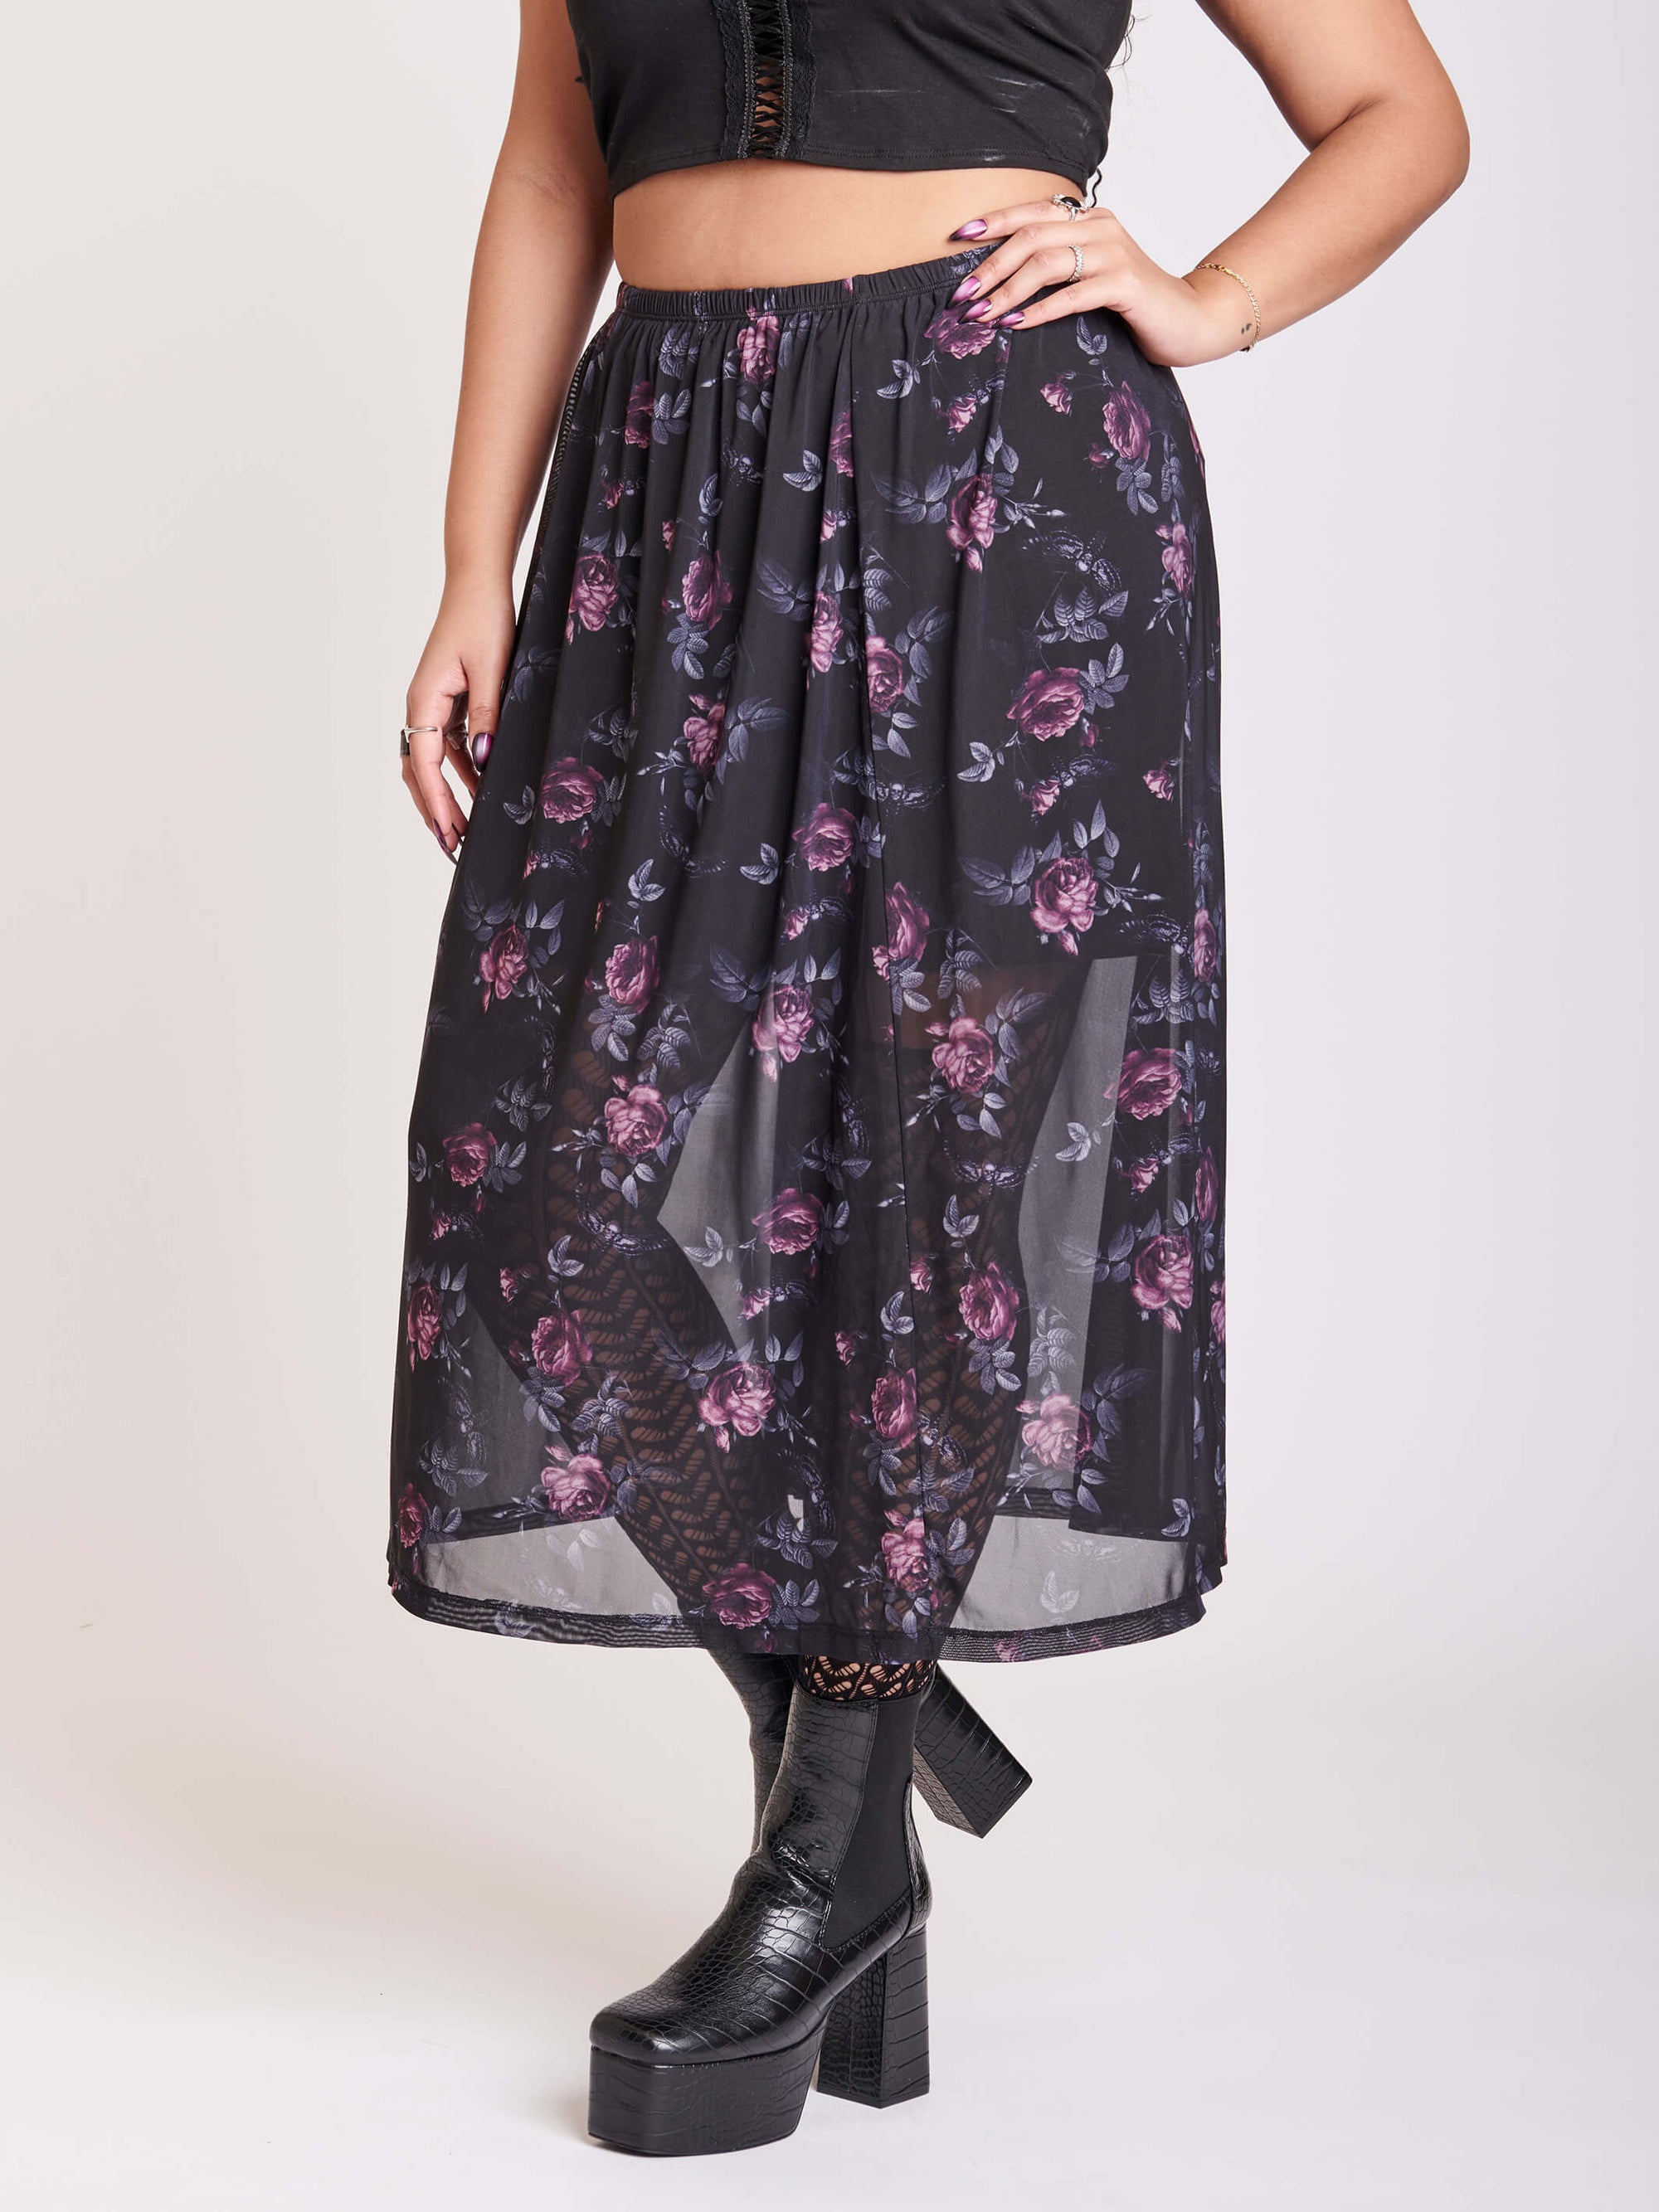 Floral Print Mesh Skirt